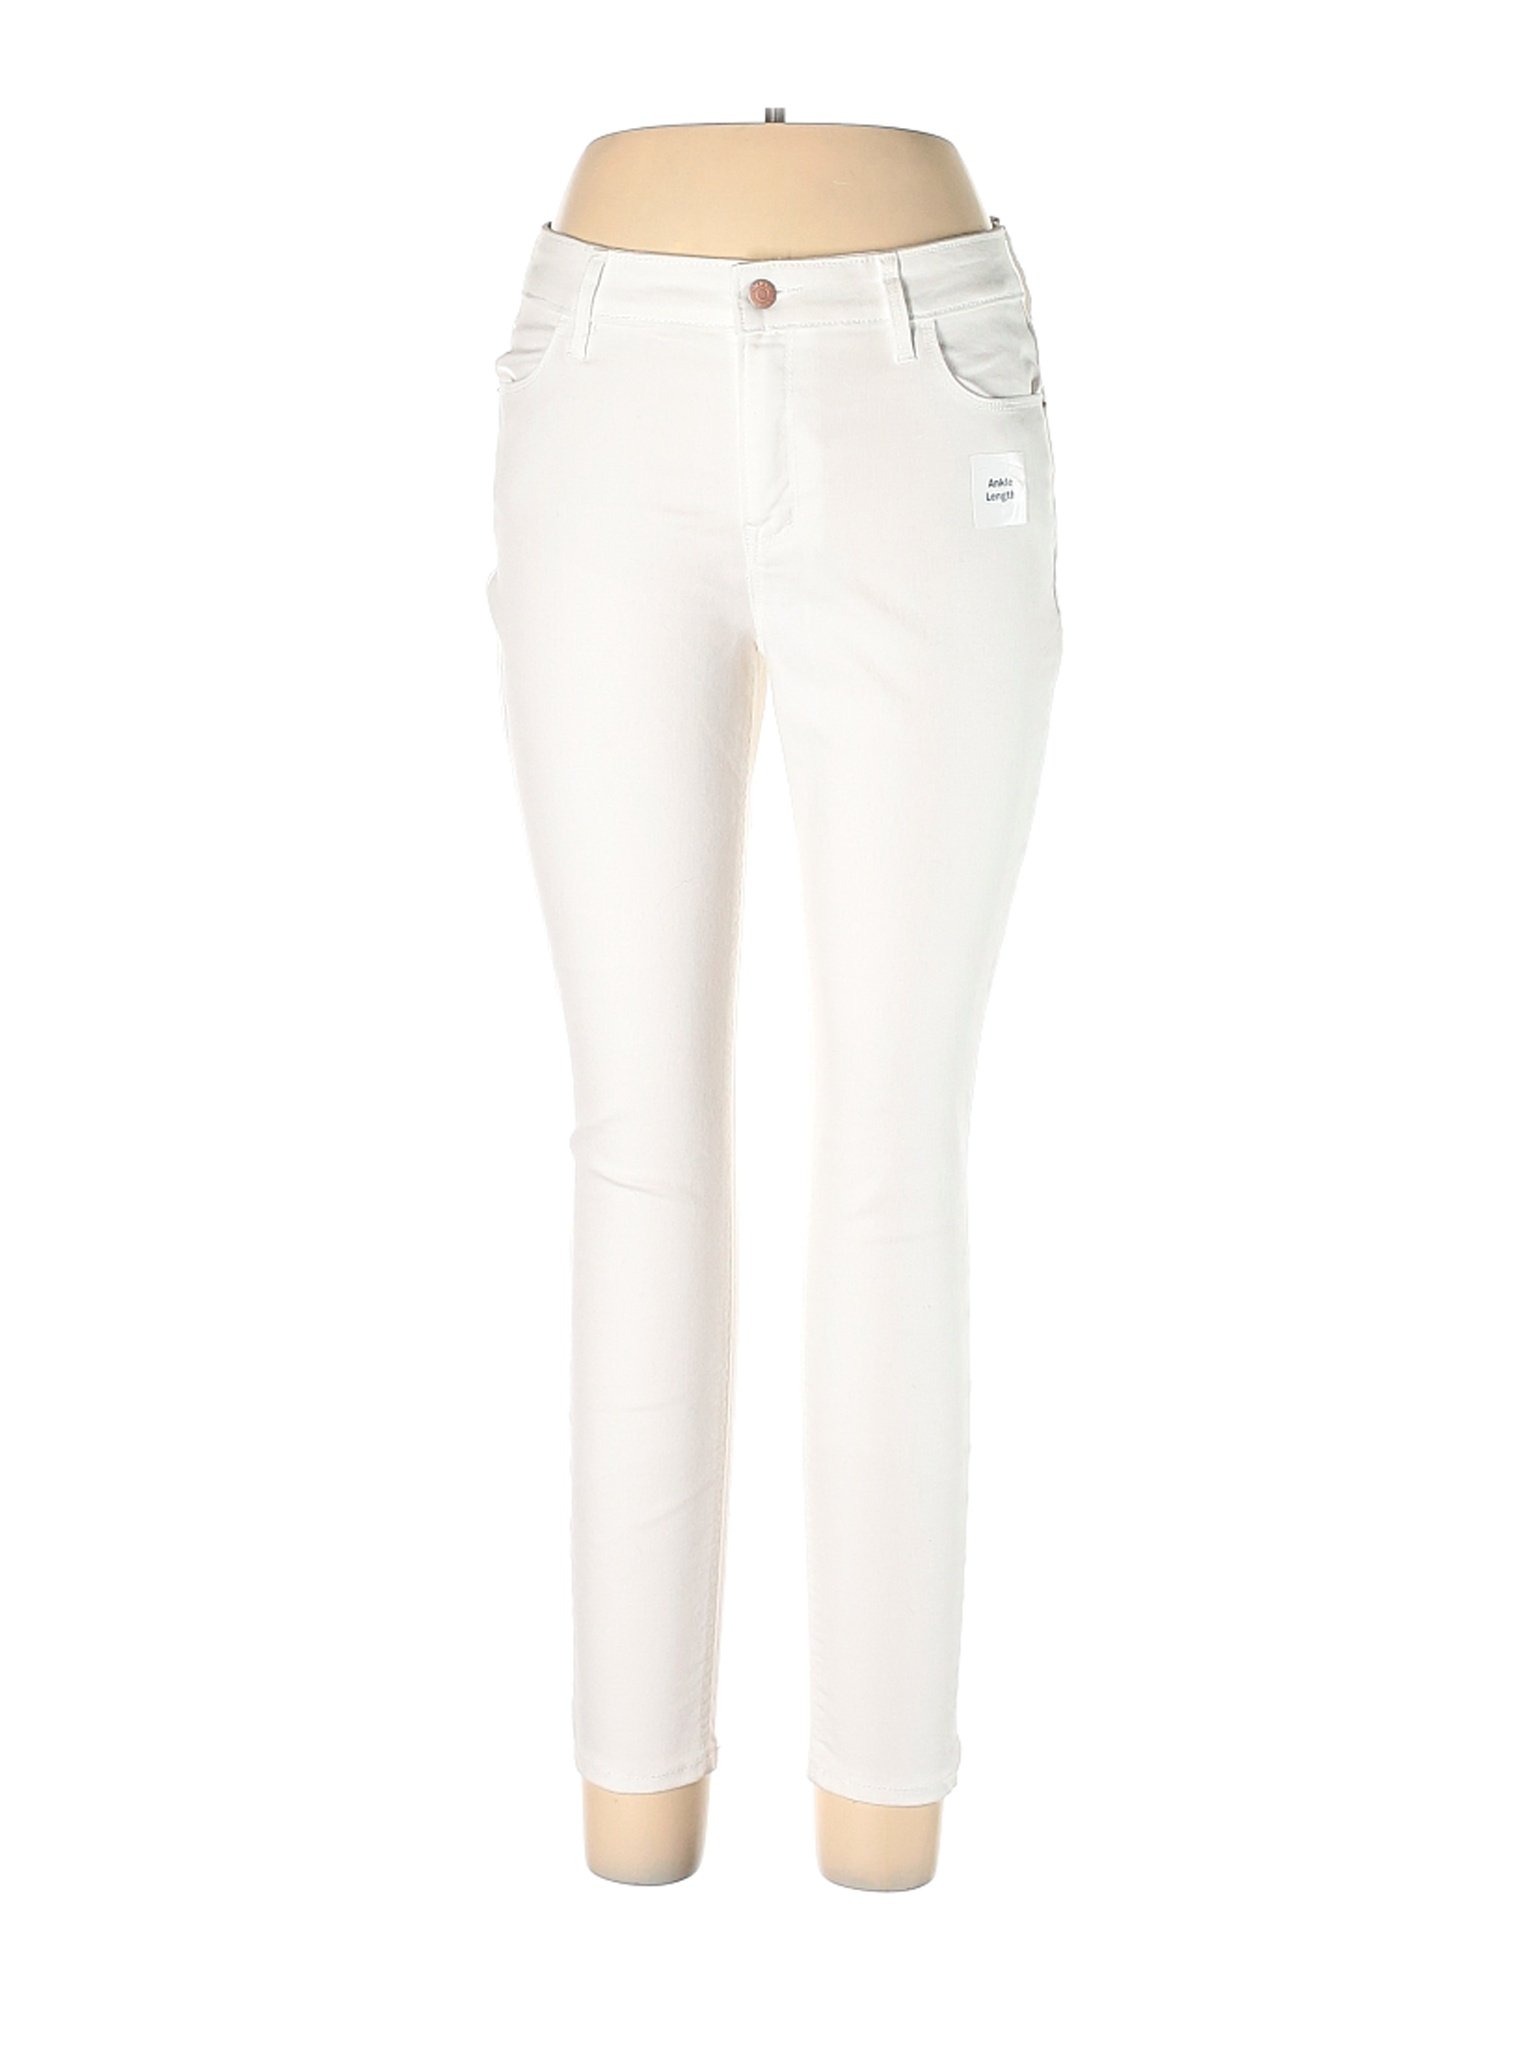 Old Navy Women White Jeans 10 | eBay